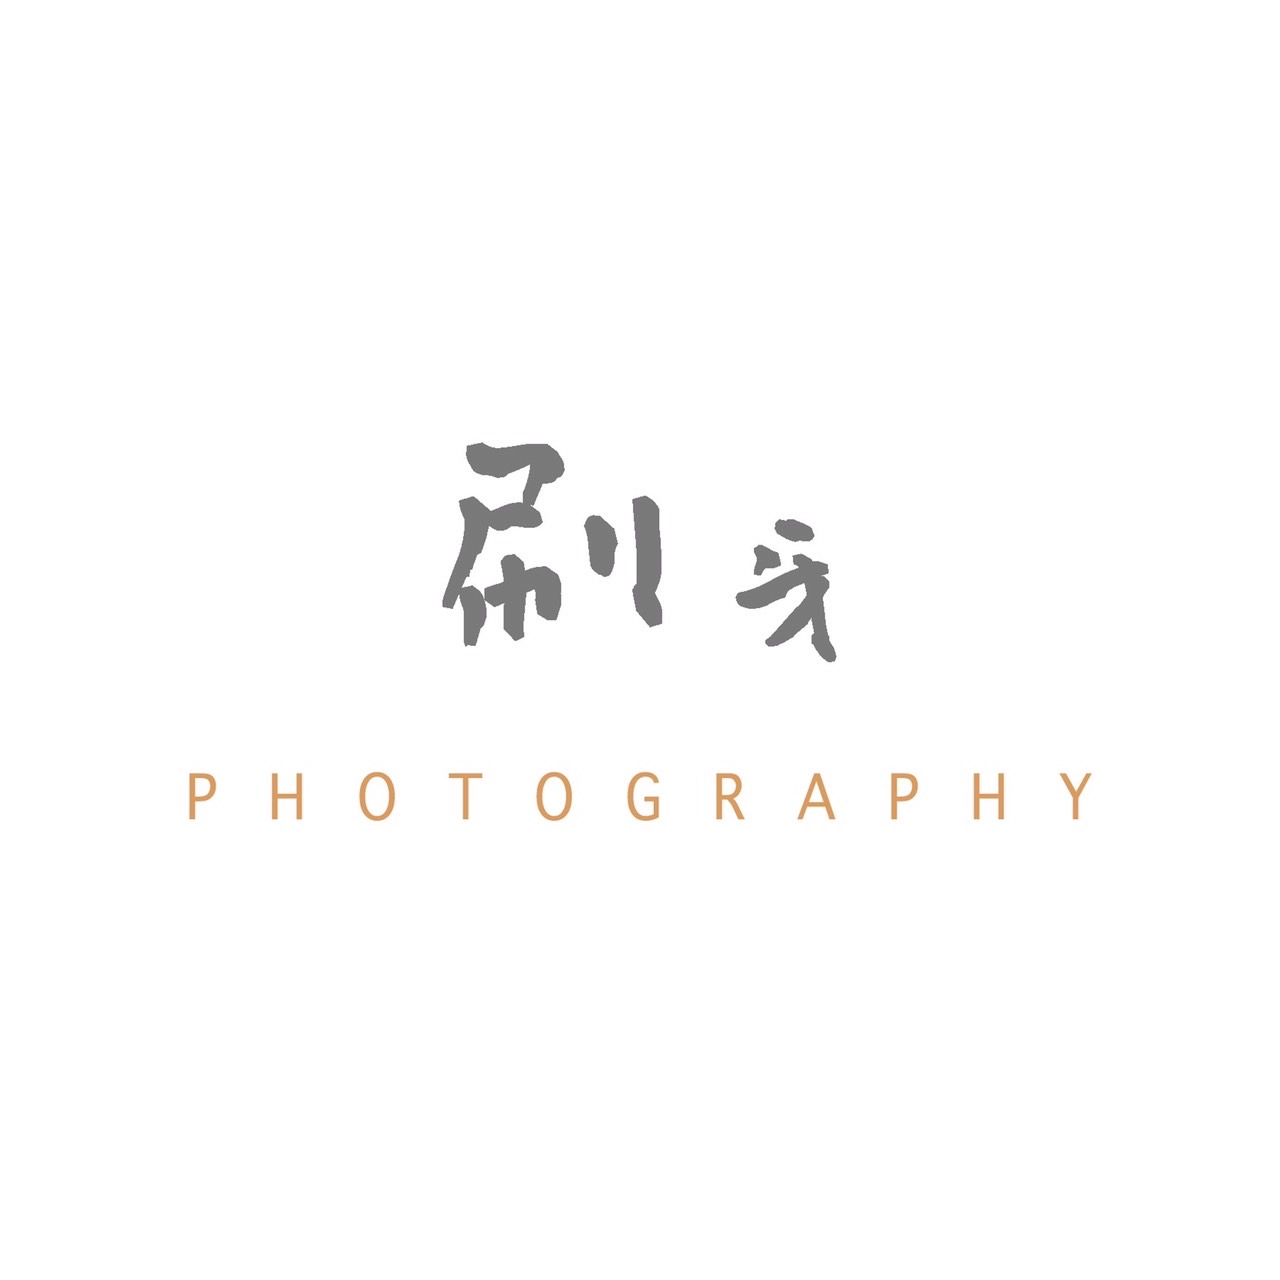 刷牙 Photography | 自助婚紗攝影師 - 台中攝影工作室